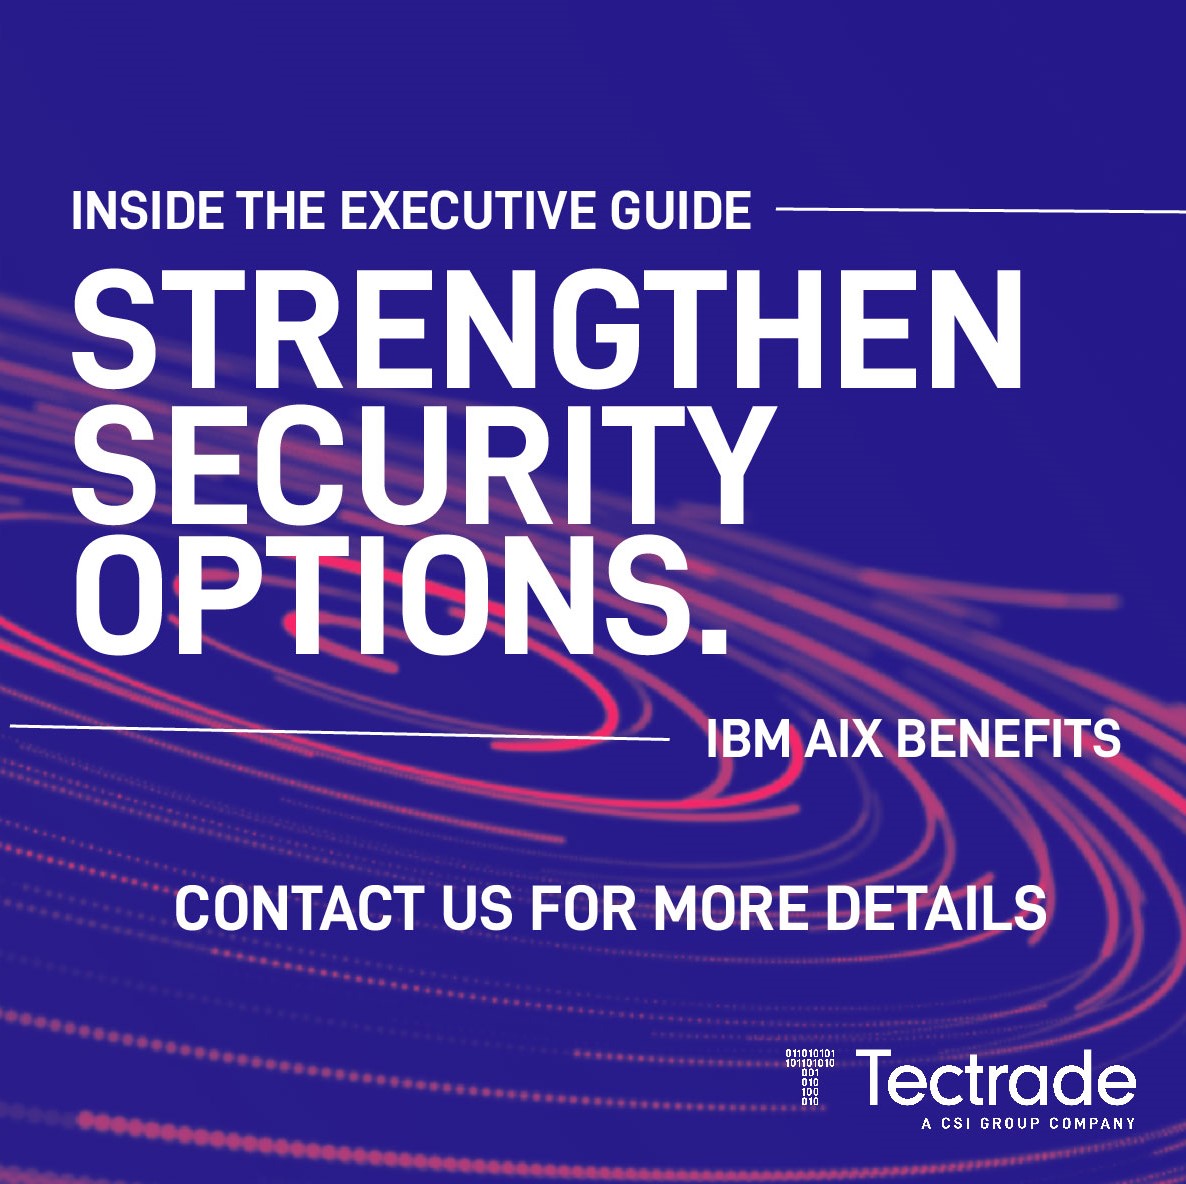 IBM AIX security benefits